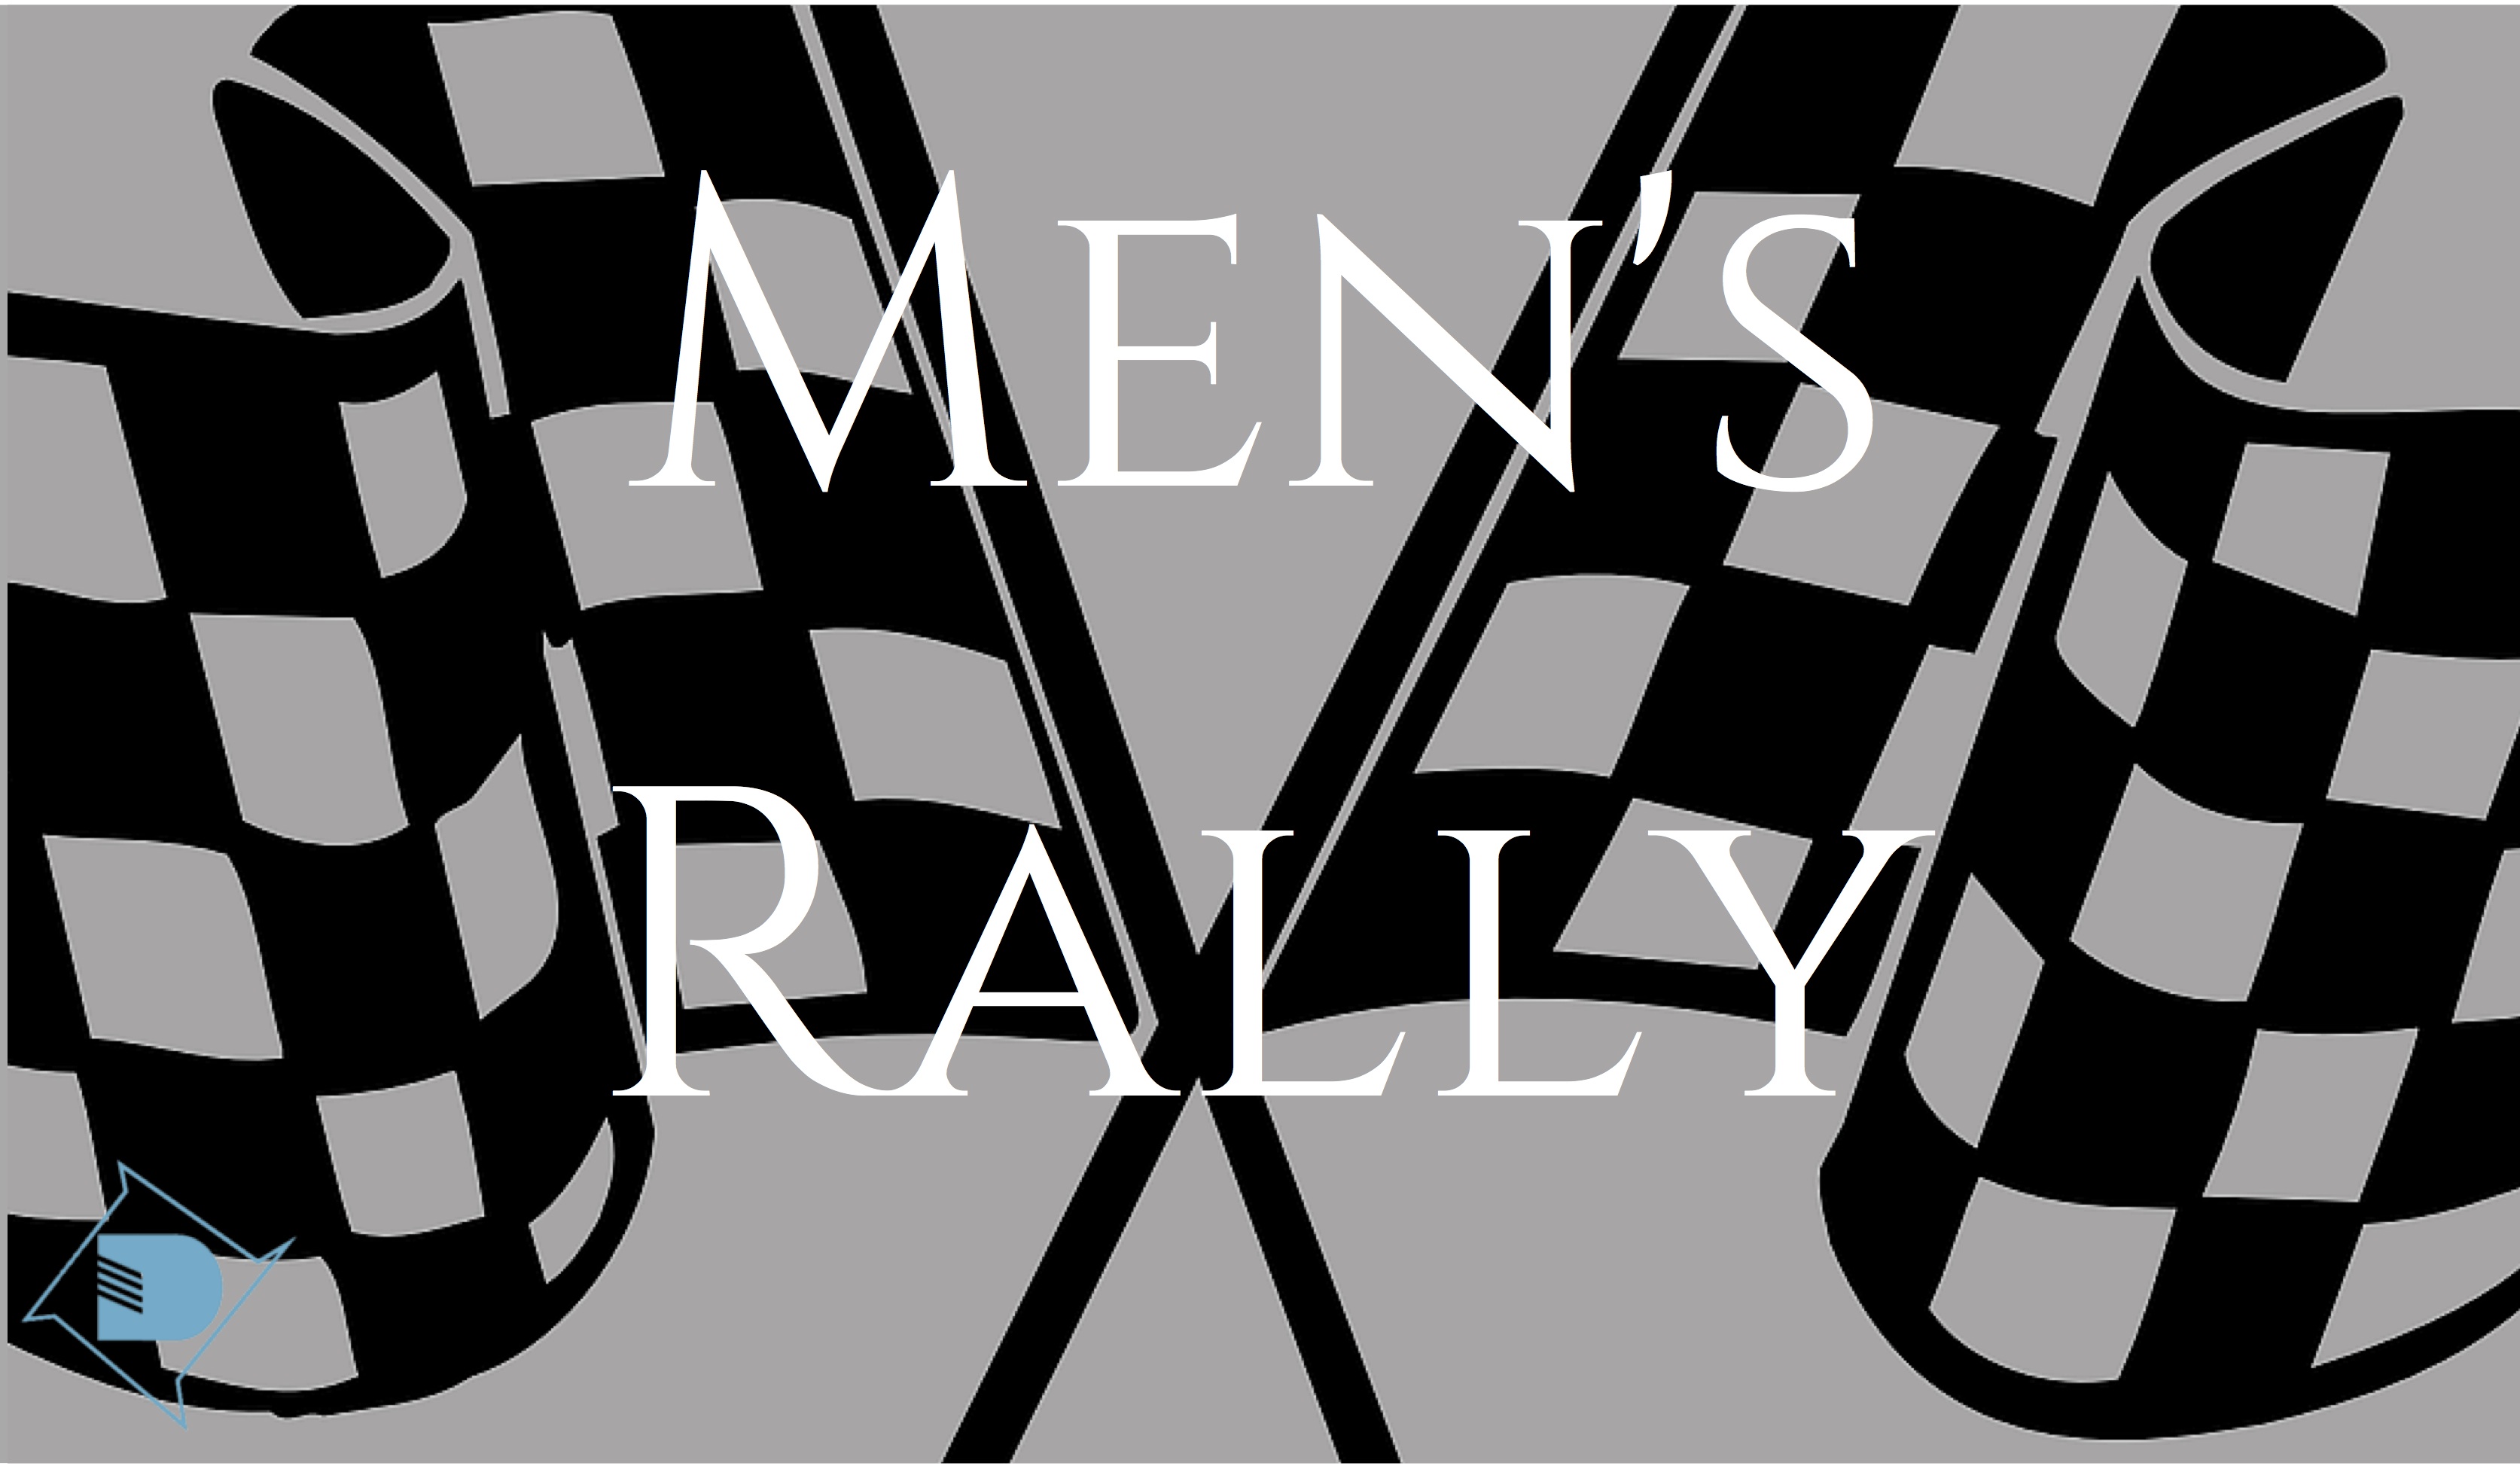 Men's Rally image